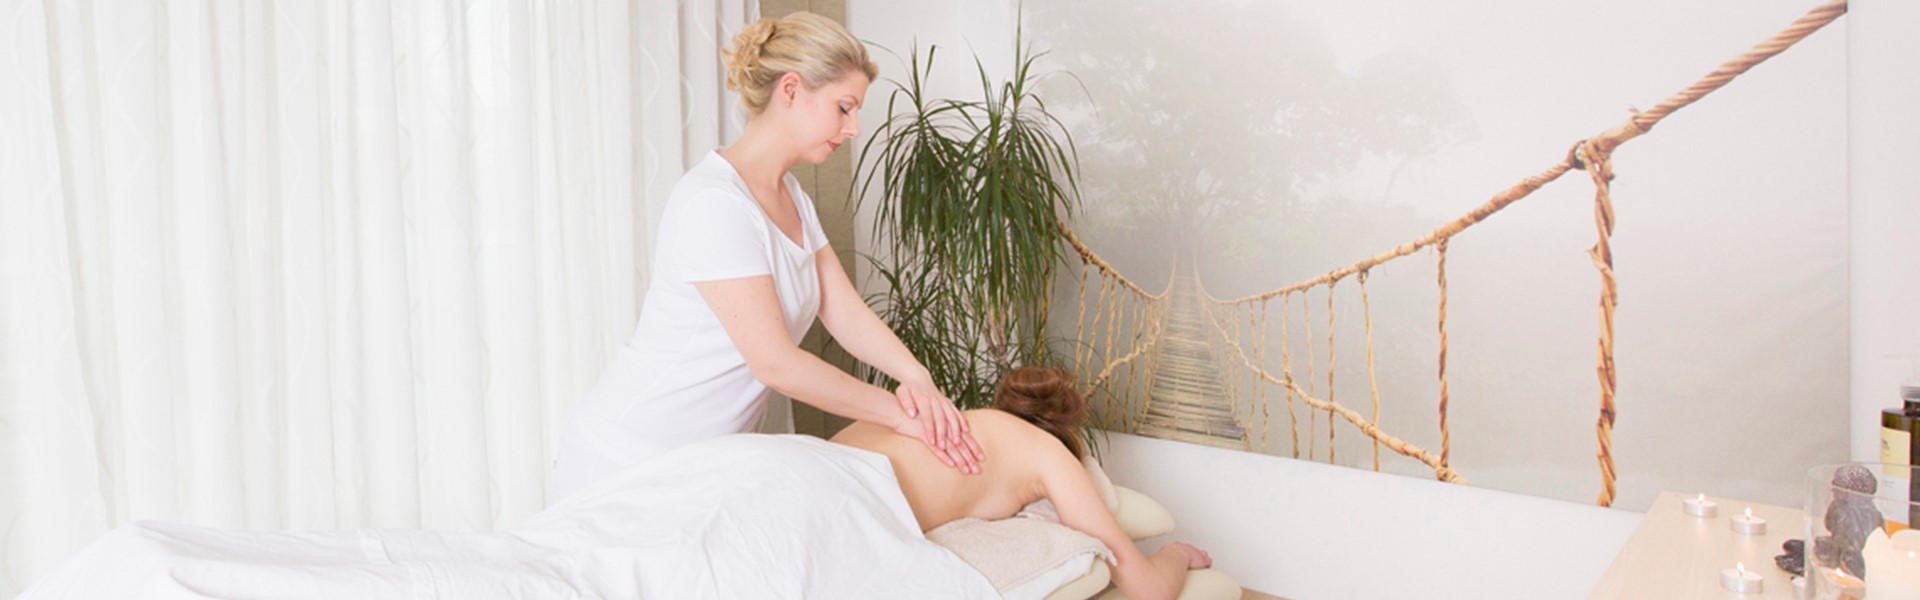 Impressionen Massage Studio Sandra Dorn-Fussenegger